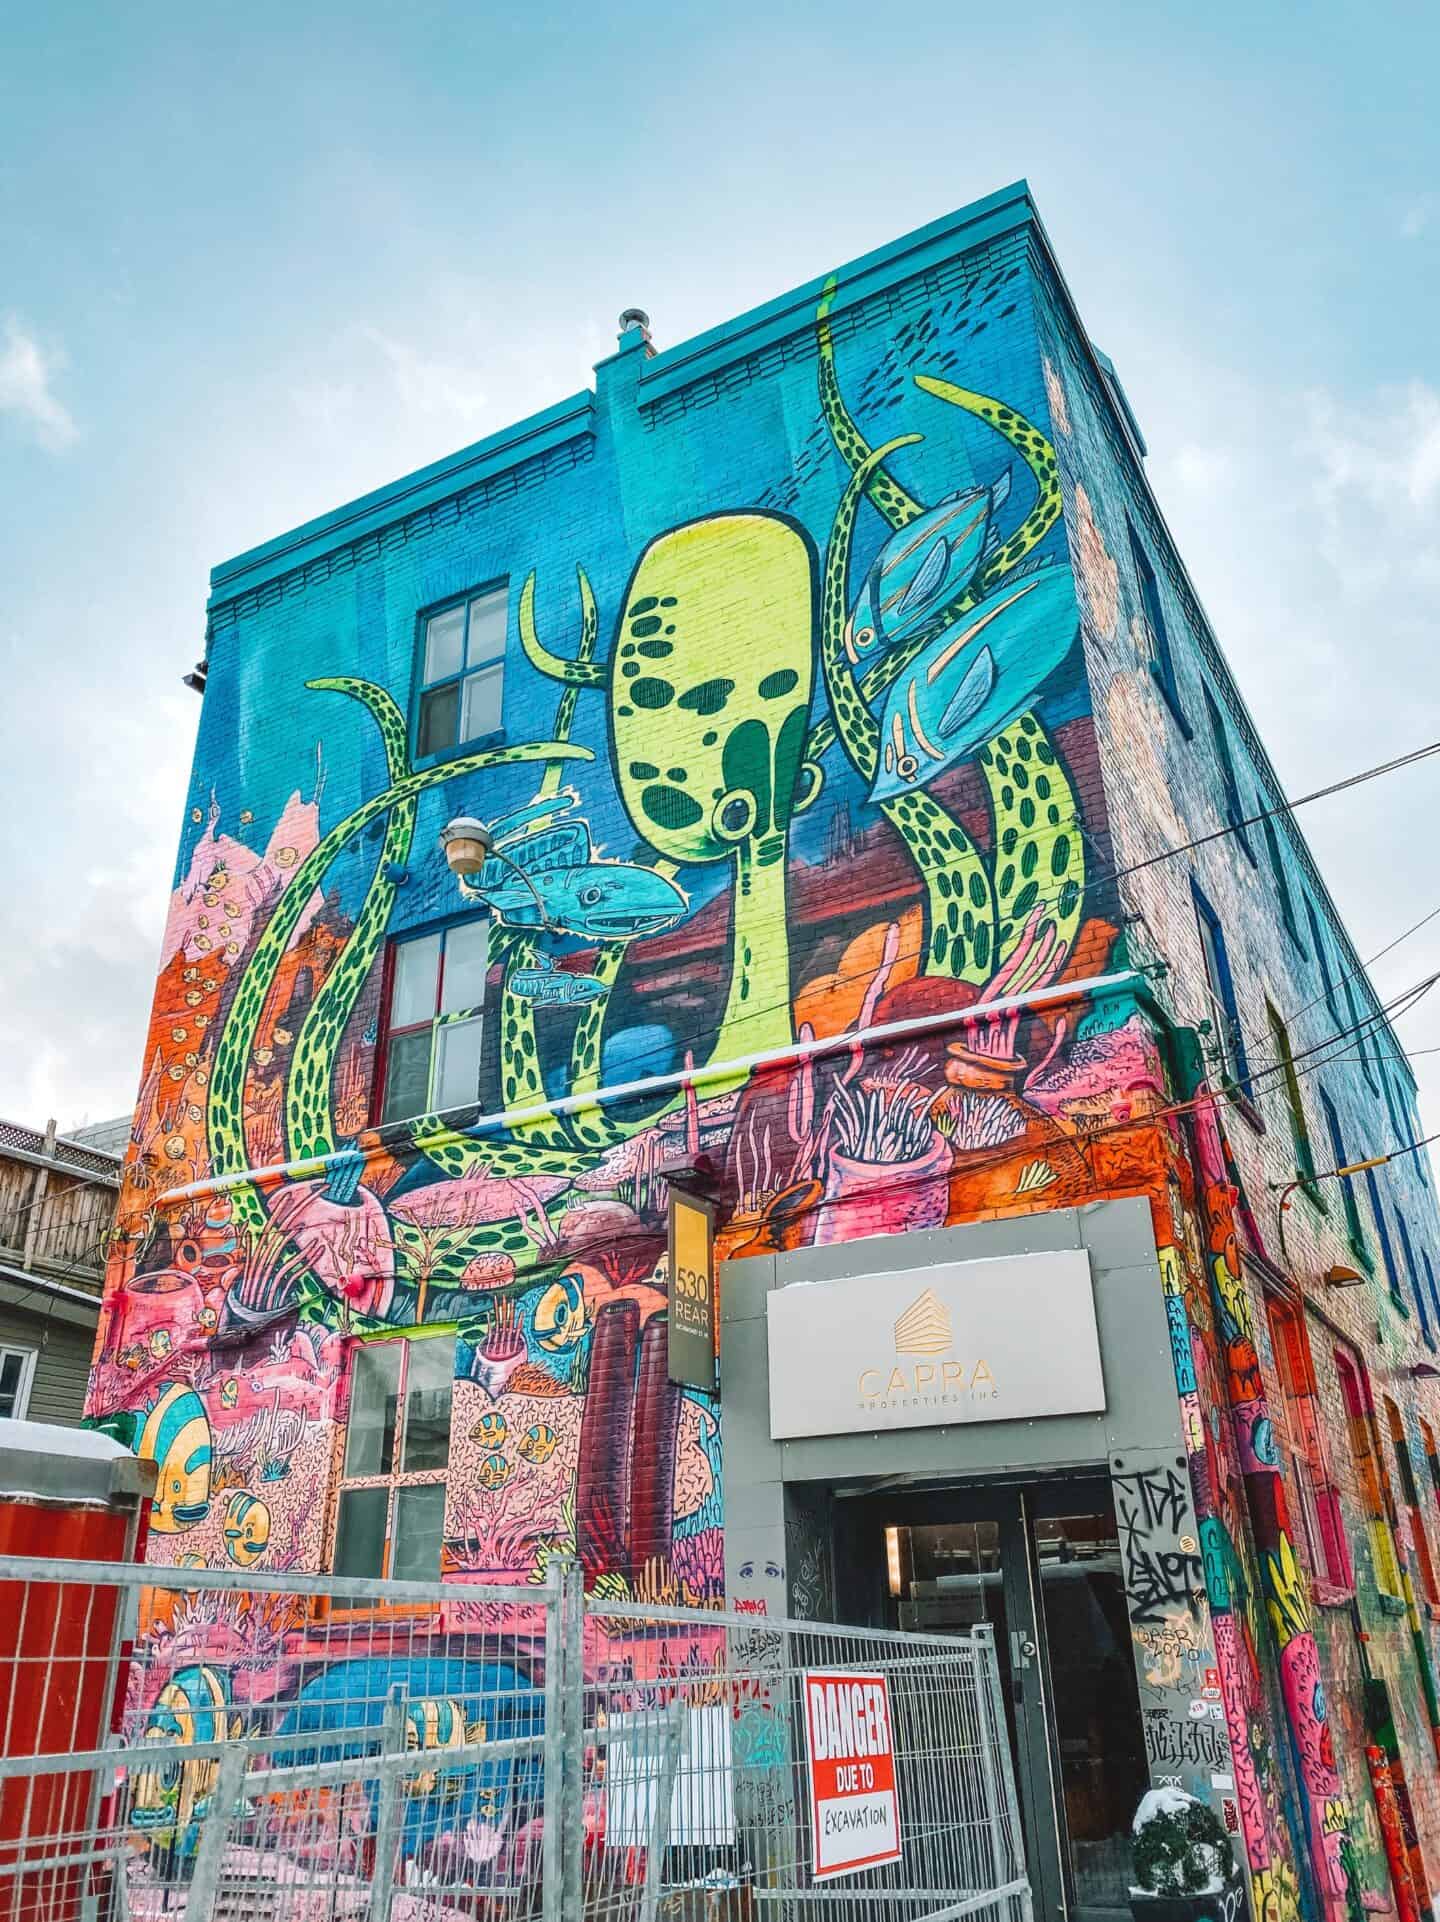 A colorful mural in Toronto's graffiti alley